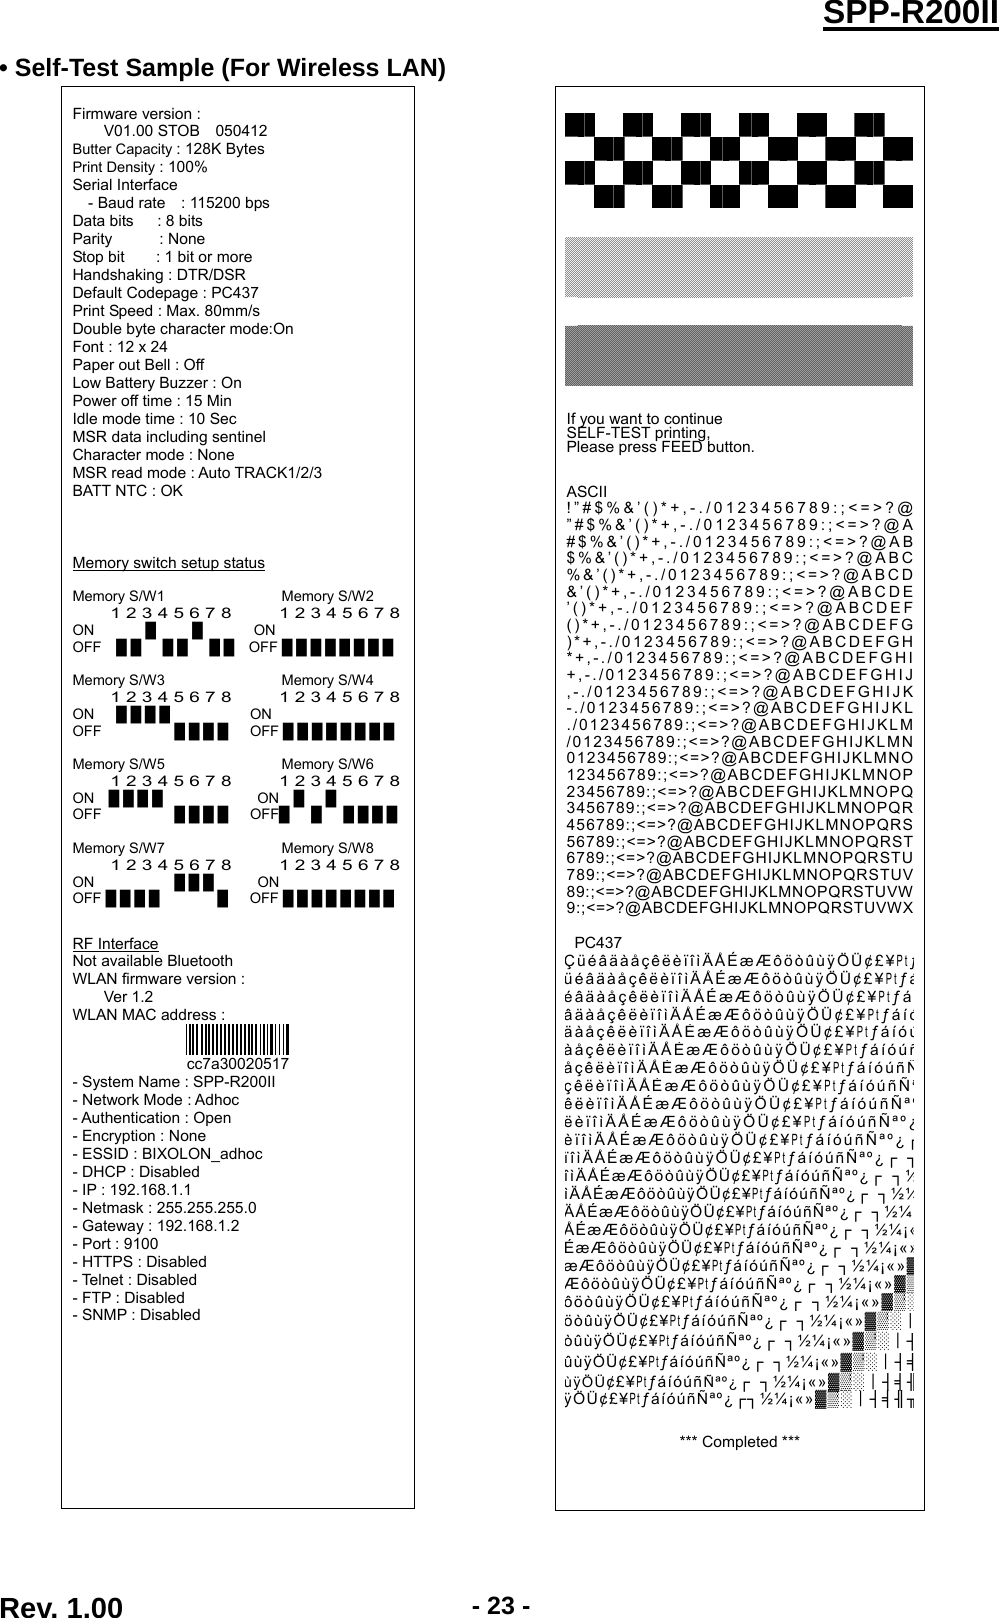  Rev. 1.00  - 23 -SPP-R200II• Self-Test Sample (For Wireless LAN)  Firmware version : V01.00 STOB    050412 Butter Capacity : 128K Bytes Print Density : 100% Serial Interface - Baud rate    : 115200 bps Data bits   : 8 bits Parity      : None Stop bit    : 1 bit or more Handshaking : DTR/DSR Default Codepage : PC437 Print Speed : Max. 80mm/s Double byte character mode:On Font : 12 x 24 Paper out Bell : Off Low Battery Buzzer : On Power off time : 15 Min Idle mode time : 10 Sec MSR data including sentinel Character mode : None MSR read mode : Auto TRACK1/2/3 BATT NTC : OK    Memory switch setup status  Memory S/W1                Memory S/W2 1 2 3 4 5 6 7 8          1 2 3 4 5 6 7 8ON       █     █       ON OFF  █ █   █ █   █ █  OFF █ █ █ █ █ █ █ █  Memory S/W3                Memory S/W4 1 2 3 4 5 6 7 8          1 2 3 4 5 6 7 8ON   █ █ █ █           ON OFF          █ █ █ █   OFF █ █ █ █ █ █ █ █  Memory S/W5                Memory S/W6  1 2 3 4 5 6 7 8          1 2 3 4 5 6 7 8ON  █ █ █ █             ON  █   █ OFF          █ █ █ █   OFF█   █   █ █ █ █  Memory S/W7                Memory S/W8 1 2 3 4 5 6 7 8          1 2 3 4 5 6 7 8ON           █ █ █      ON OFF █ █ █ █        █   OFF █ █ █ █ █ █ █ █   RF Interface Not available Bluetooth WLAN firmware version :     Ver 1.2 WLAN MAC address :  cc7a30020517 - System Name : SPP-R200II - Network Mode : Adhoc - Authentication : Open - Encryption : None - ESSID : BIXOLON_adhoc - DHCP : Disabled - IP : 192.168.1.1 - Netmask : 255.255.255.0 - Gateway : 192.168.1.2 - Port : 9100 - HTTPS : Disabled - Telnet : Disabled - FTP : Disabled - SNMP : Disabled                               If you want to continue SELF-TEST printing, Please press FEED button.   ASCII !”#$%&amp;’()*+,-./0123456789:;&lt;=&gt;?@”#$%&amp;’()*+,-./0123456789:;&lt;=&gt;?@A#$%&amp;’()*+,-./0123456789:;&lt;=&gt;?@AB$%&amp;’()*+,-./0123456789:;&lt;=&gt;?@ABC%&amp;’()*+,-./0123456789:;&lt;=&gt;?@ABCD&amp;’()*+,-./0123456789:;&lt;=&gt;?@ABCDE’()*+,-./0123456789:;&lt;=&gt;?@ABCDEF()*+,-./0123456789:;&lt;=&gt;?@ABCDEFG)*+,-./0123456789:;&lt;=&gt;?@ABCDEFGH*+,-./0123456789:;&lt;=&gt;?@ABCDEFGHI+,-./0123456789:;&lt;=&gt;?@ABCDEFGHIJ,-./0123456789:;&lt;=&gt;?@ABCDEFGHIJK-./0123456789:;&lt;=&gt;?@ABCDEFGHIJKL./0123456789:;&lt;=&gt;?@ABCDEFGHIJKLM/0123456789:;&lt;=&gt;?@ABCDEFGHIJKLMN0123456789:;&lt;=&gt;?@ABCDEFGHIJKLMNO123456789:;&lt;=&gt;?@ABCDEFGHIJKLMNOP23456789:;&lt;=&gt;?@ABCDEFGHIJKLMNOPQ3456789:;&lt;=&gt;?@ABCDEFGHIJKLMNOPQR456789:;&lt;=&gt;?@ABCDEFGHIJKLMNOPQRS56789:;&lt;=&gt;?@ABCDEFGHIJKLMNOPQRST6789:;&lt;=&gt;?@ABCDEFGHIJKLMNOPQRSTU789:;&lt;=&gt;?@ABCDEFGHIJKLMNOPQRSTUV89:;&lt;=&gt;?@ABCDEFGHIJKLMNOPQRSTUVW9:;&lt;=&gt;?@ABCDEFGHIJKLMNOPQRSTUVWX PC437 ÇüéâäàåçêëèïîìÄÅÉæÆôöòûùÿÖÜ¢£¥PtƒüéâäàåçêëèïîìÄÅÉæÆôöòûùÿÖÜ¢£¥PtƒáéâäàåçêëèïîìÄÅÉæÆôöòûùÿÖÜ¢£¥PtƒáâäàåçêëèïîìÄÅÉæÆôöòûùÿÖÜ¢£¥PtƒáíóäàåçêëèïîìÄÅÉæÆôöòûùÿÖÜ¢£¥PtƒáíóúàåçêëèïîìÄÅÉæÆôöòûùÿÖÜ¢£¥PtƒáíóúñåçêëèïîìÄÅÉæÆôöòûùÿÖÜ¢£¥PtƒáíóúñÑçêëèïîìÄÅÉæÆôöòûùÿÖÜ¢£¥PtƒáíóúñÑªêëèïîìÄÅÉæÆôöòûùÿÖÜ¢£¥PtƒáíóúñÑªºëèïîìÄÅÉæÆôöòûùÿÖÜ¢£¥PtƒáíóúñÑªº¿èïîìÄÅÉæÆôöòûùÿÖÜ¢£¥PtƒáíóúñÑªº¿┌ïîìÄÅÉæÆôöòûùÿÖÜ¢£¥PtƒáíóúñÑªº¿┌ ┐îìÄÅÉæÆôöòûùÿÖÜ¢£¥PtƒáíóúñÑªº¿┌ ┐½ìÄÅÉæÆôöòûùÿÖÜ¢£¥PtƒáíóúñÑªº¿┌ ┐½¼ÄÅÉæÆôöòûùÿÖÜ¢£¥PtƒáíóúñÑªº¿┌ ┐½¼ÅÉæÆôöòûùÿÖÜ¢£¥PtƒáíóúñÑªº¿┌ ┐½¼¡«ÉæÆôöòûùÿÖÜ¢£¥PtƒáíóúñÑªº¿┌ ┐½¼¡«»æÆôöòûùÿÖÜ¢£¥PtƒáíóúñÑªº¿┌ ┐½¼¡«»▓ÆôöòûùÿÖÜ¢£¥PtƒáíóúñÑªº¿┌ ┐½¼¡«»▓▒ôöòûùÿÖÜ¢£¥PtƒáíóúñÑªº¿┌ ┐½¼¡«»▓▒░öòûùÿÖÜ¢£¥PtƒáíóúñÑªº¿┌ ┐½¼¡«»▓▒░┃òûùÿÖÜ¢£¥PtƒáíóúñÑªº¿┌ ┐½¼¡«»▓▒░┃┤ûùÿÖÜ¢£¥PtƒáíóúñÑªº¿┌ ┐½¼¡«»▓▒░┃┤╡ùÿÖÜ¢£¥PtƒáíóúñÑªº¿┌ ┐½¼¡«»▓▒░┃┤╡╢ÿÖÜ¢£¥PtƒáíóúñÑªº¿┌┐½¼¡«»▓▒░┃┤╡╢╖  *** Completed ***   